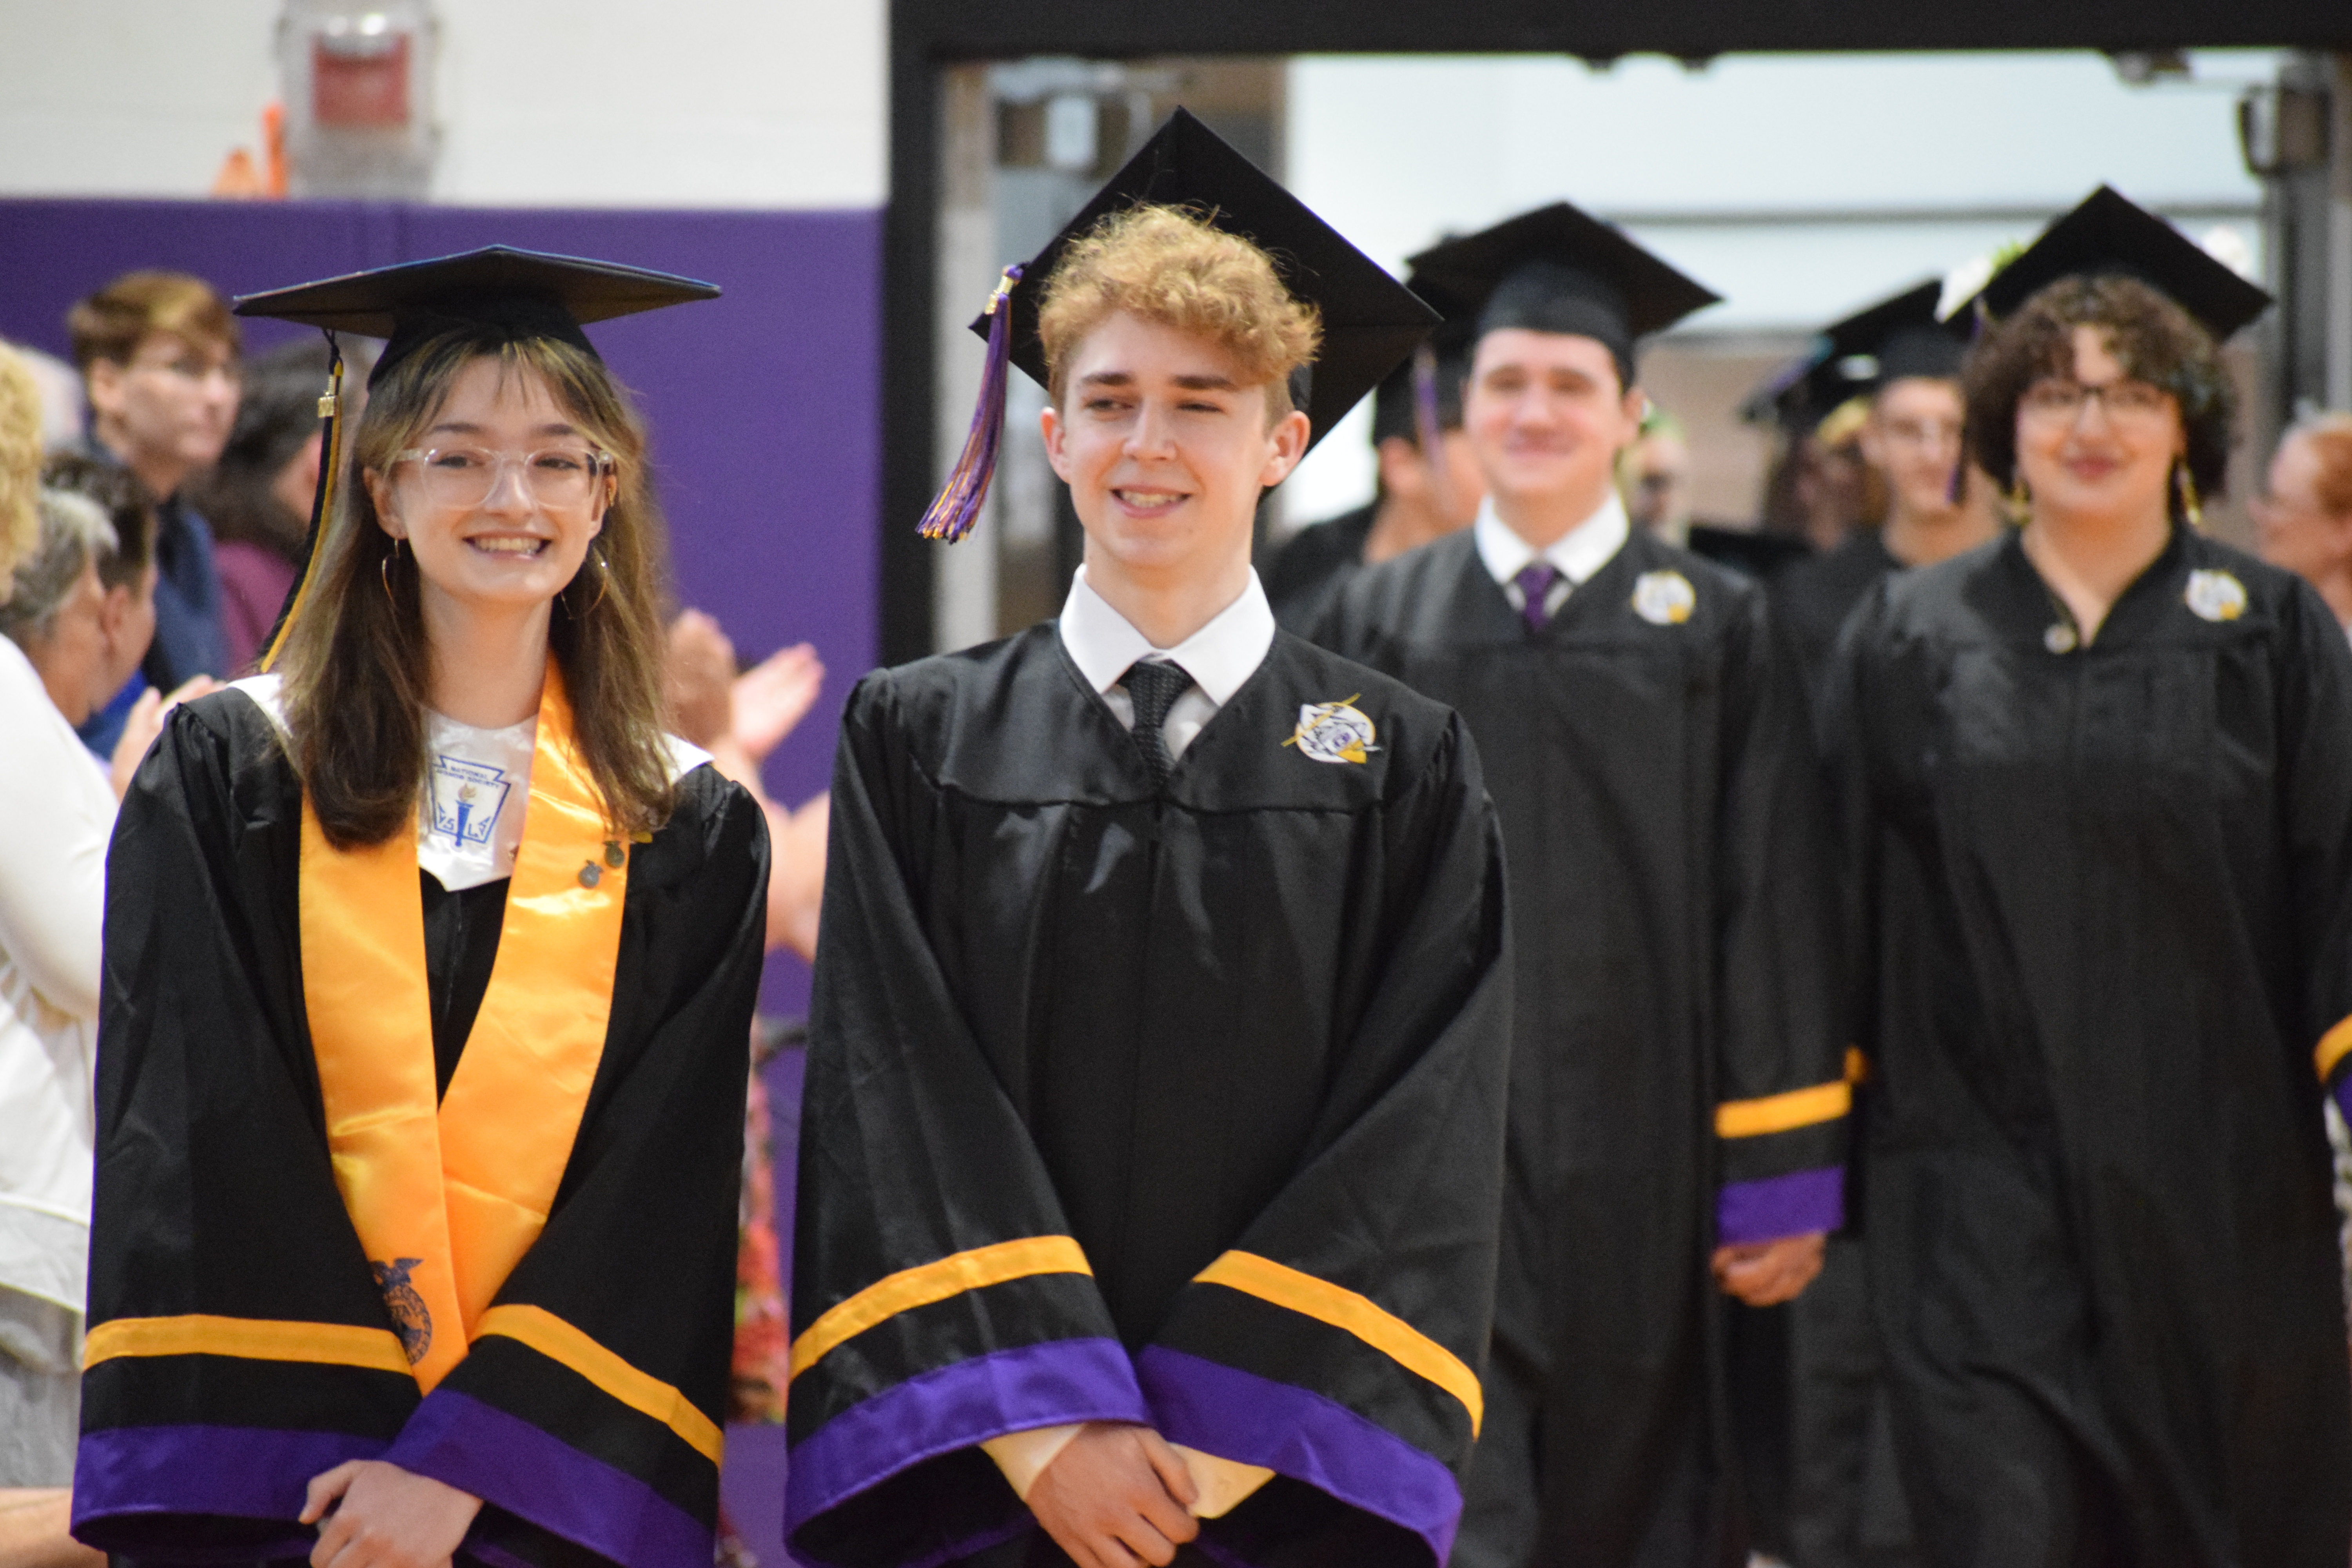 graduating students walking together